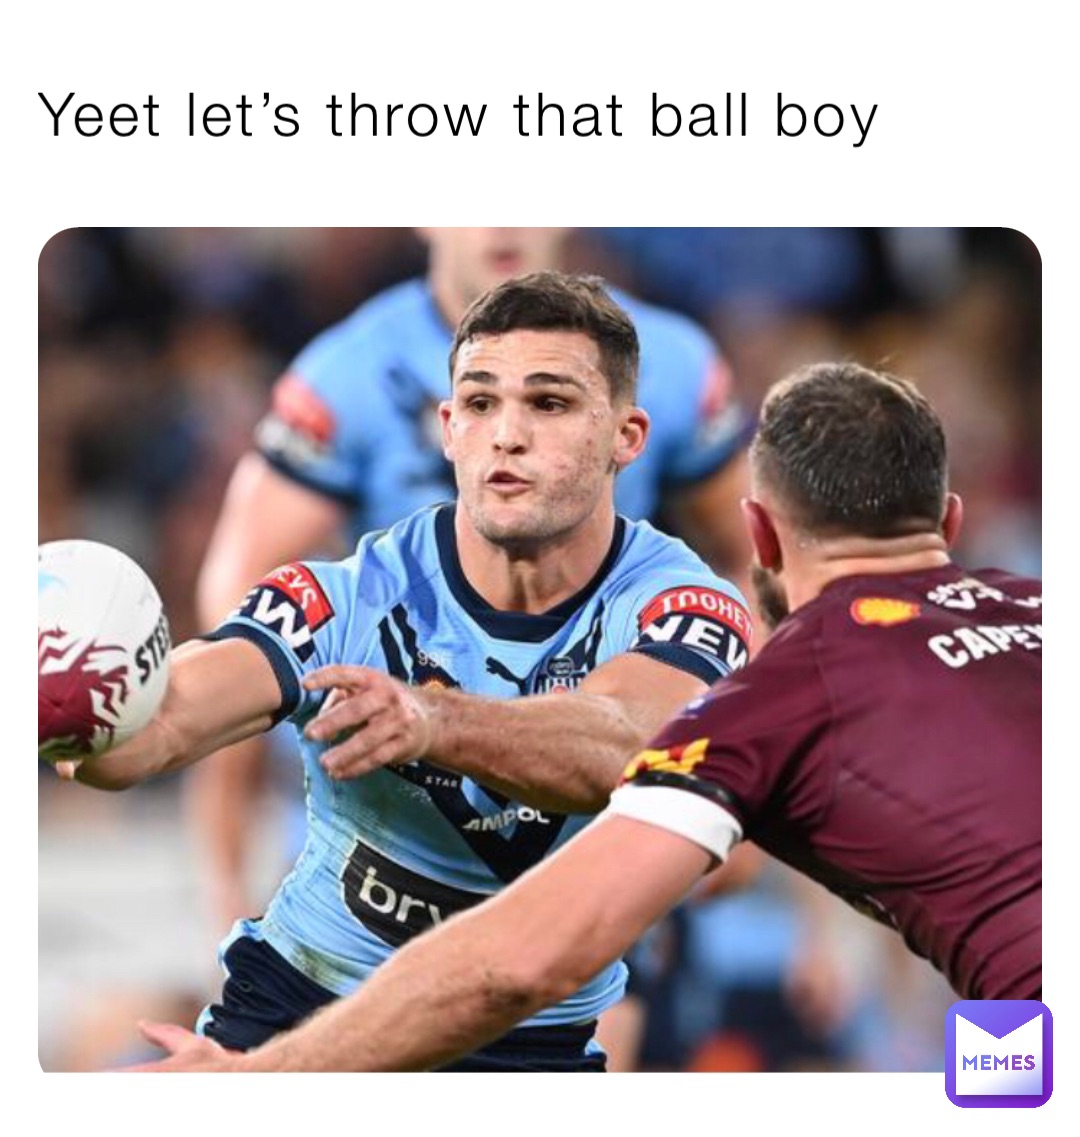 Yeet let’s throw that ball boy